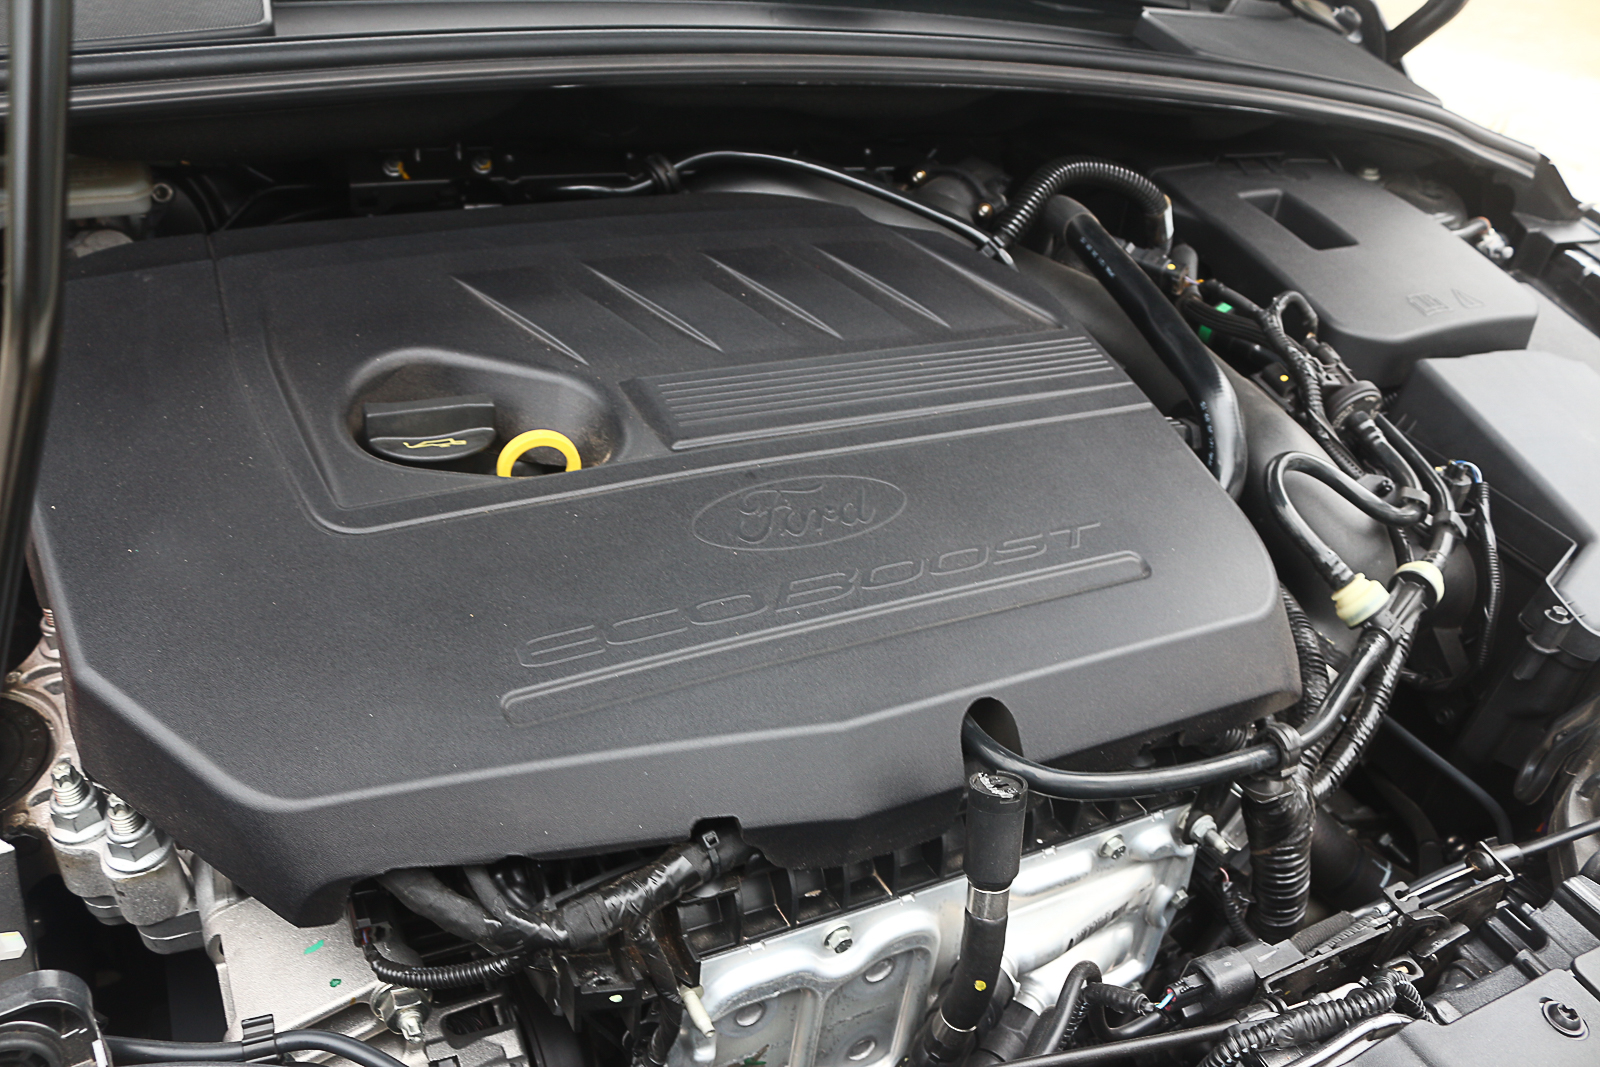 Ford Focus Ecoboost 1.5 turbo GTDi Test Drive